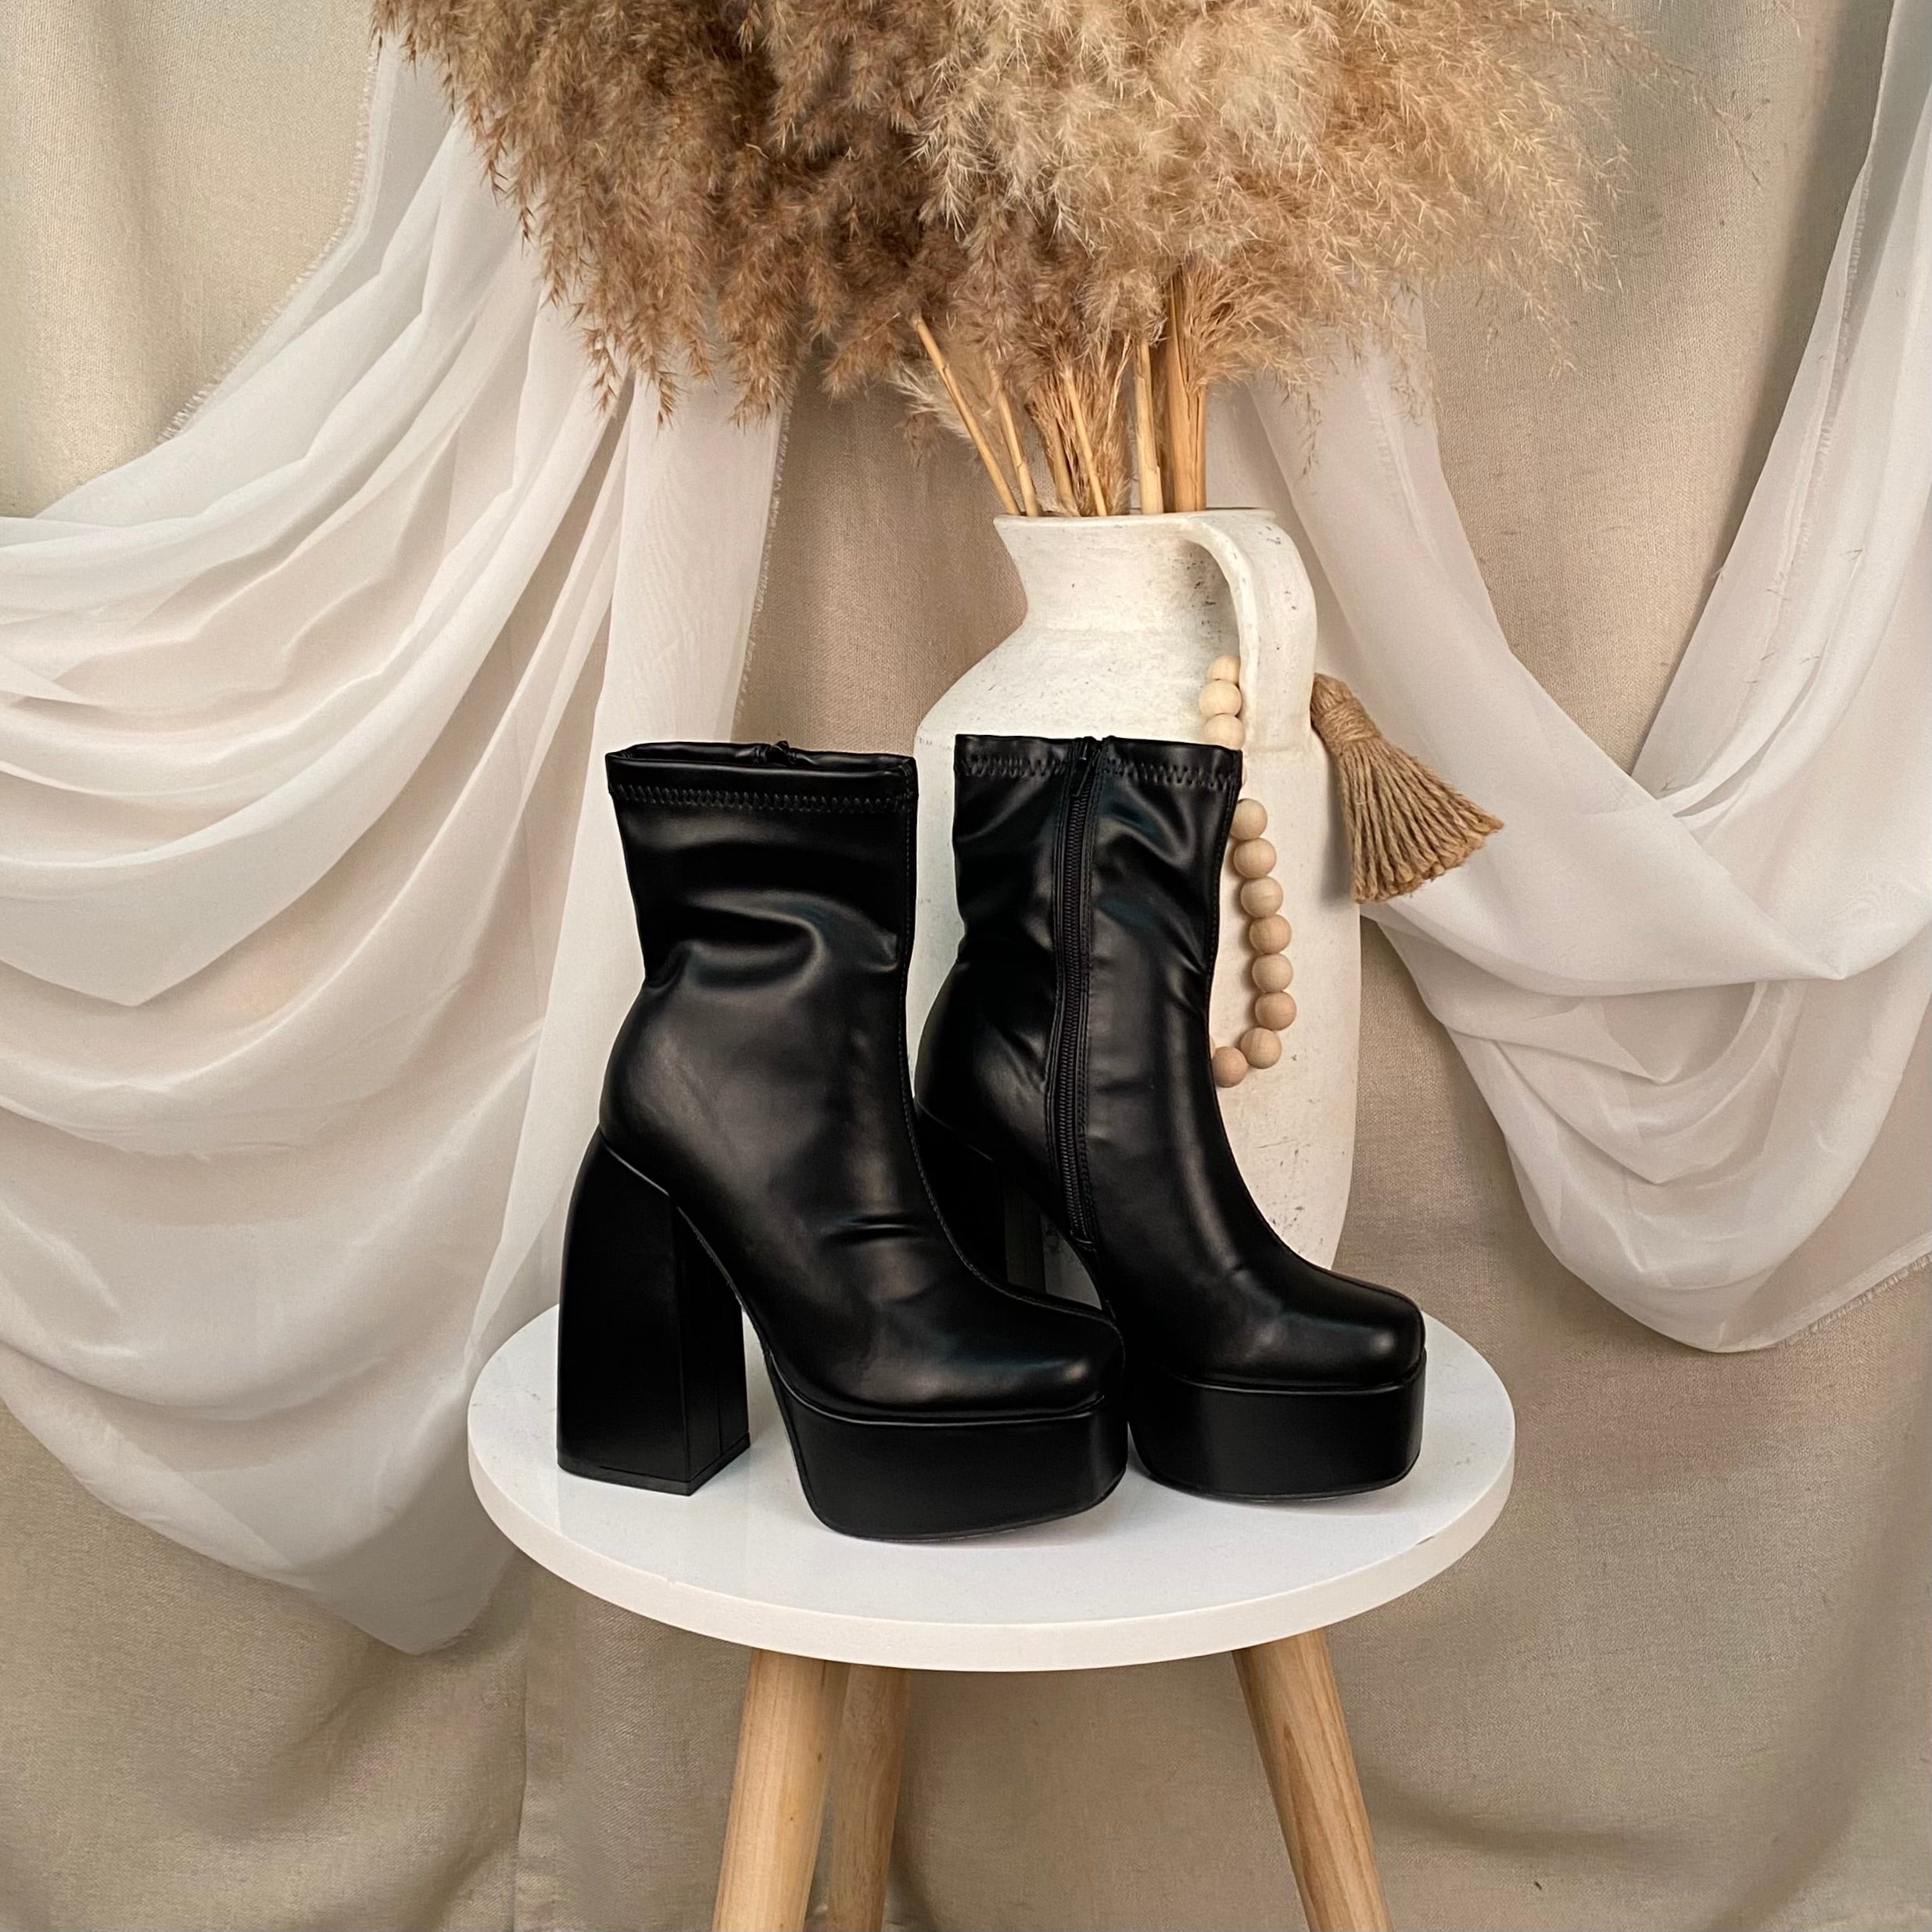 Celina Boots (Black)